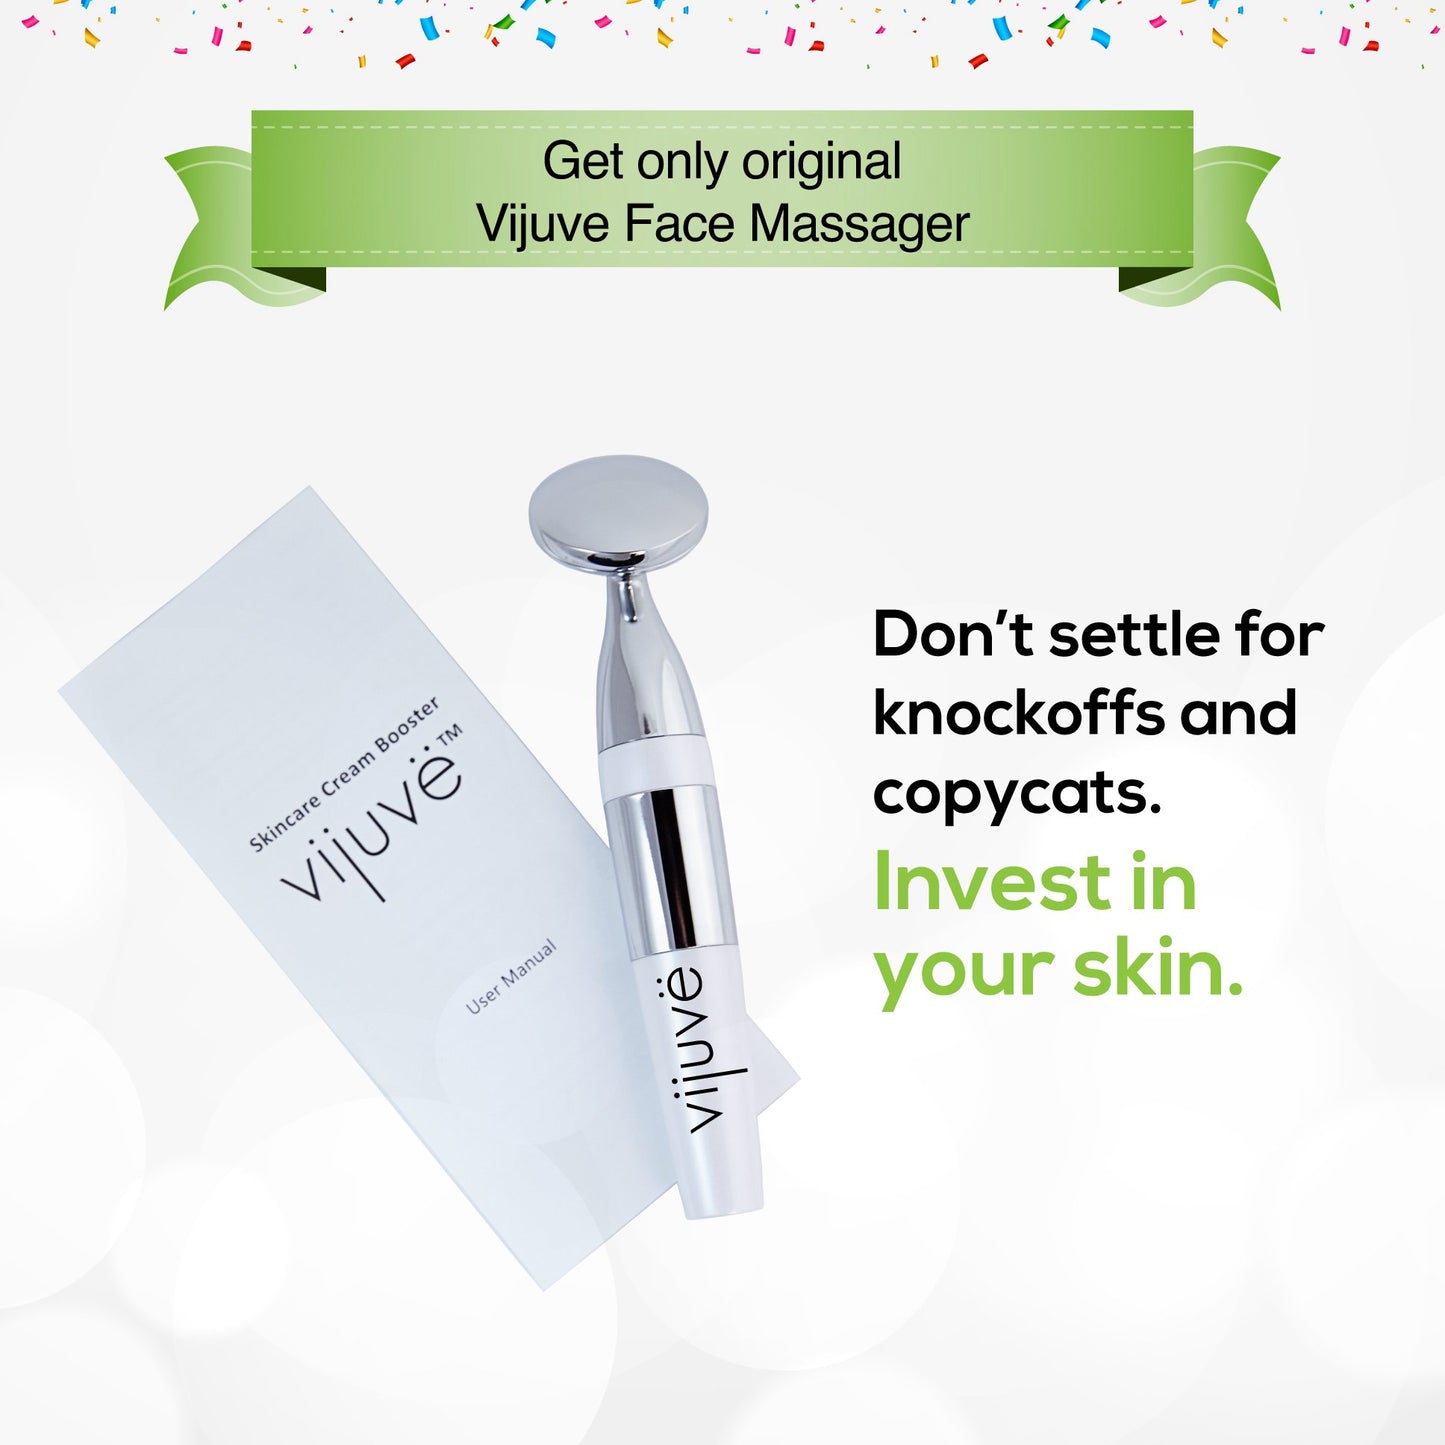 VIJUVE Anti Aging Face Massager for Wrinkles RemovalVIJUVE Anti Aging Face Massager for Wrinkles Removal